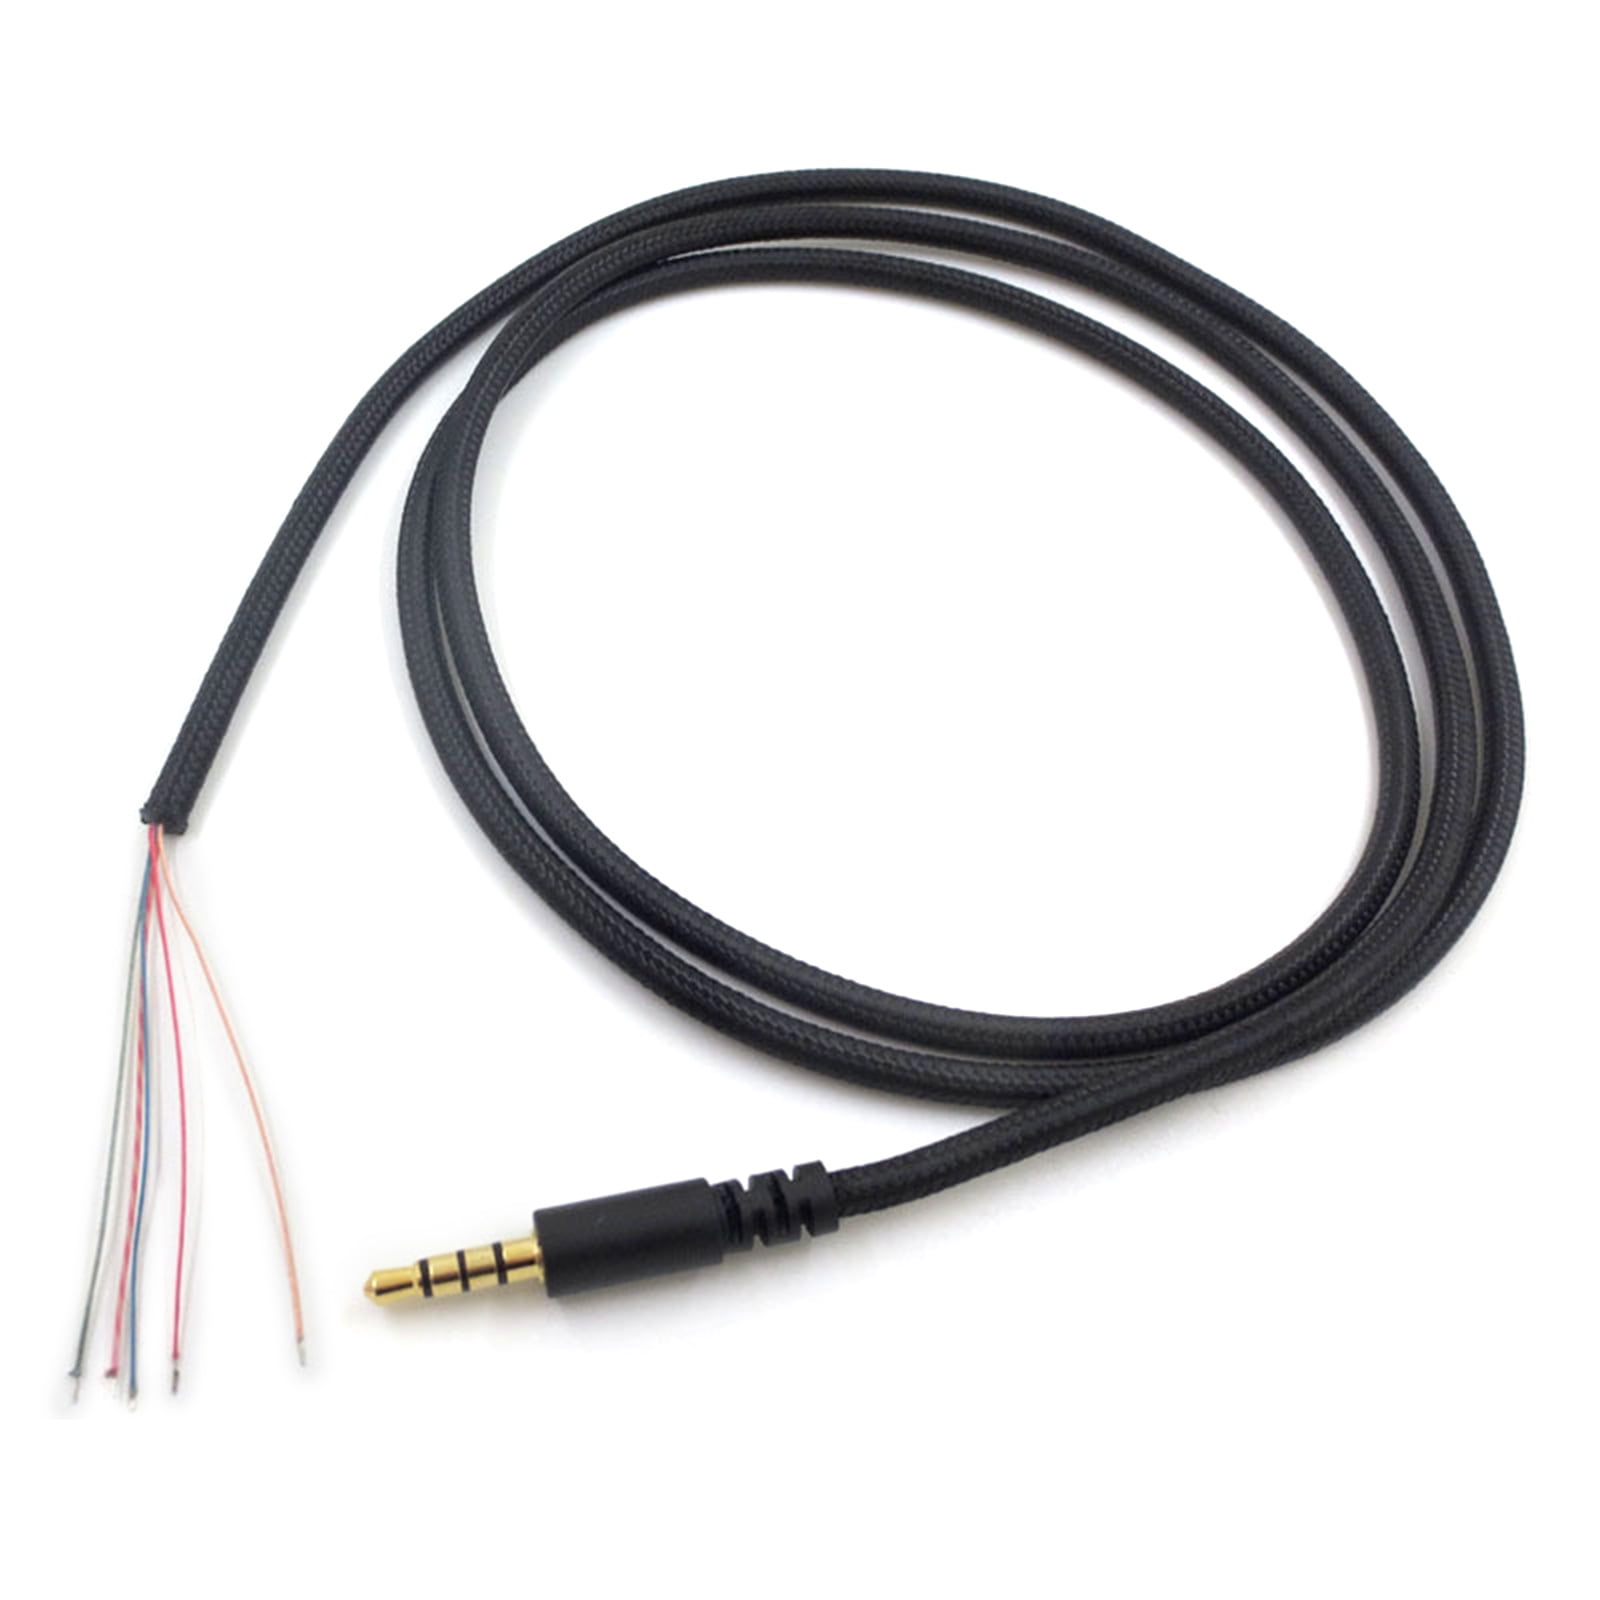 HyperX PC Extension Cable - 4-Pole to Dual 3.5mm (2m) (200 cm) - Black